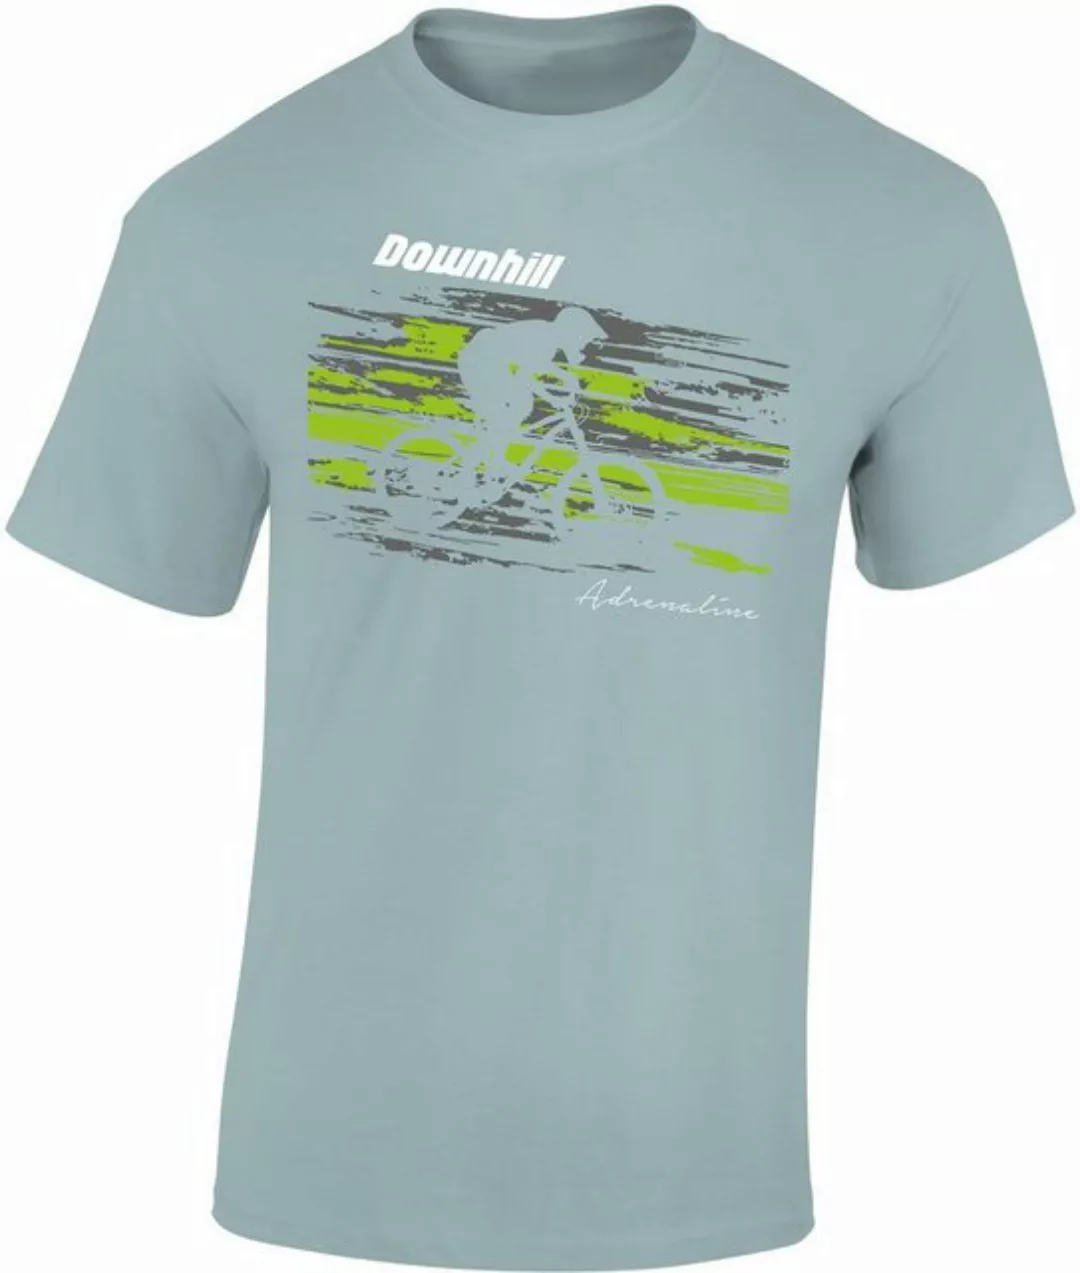 Baddery Print-Shirt Fahrrad T-Shirt : "Downhill Adrenaline", hochwertiger S günstig online kaufen